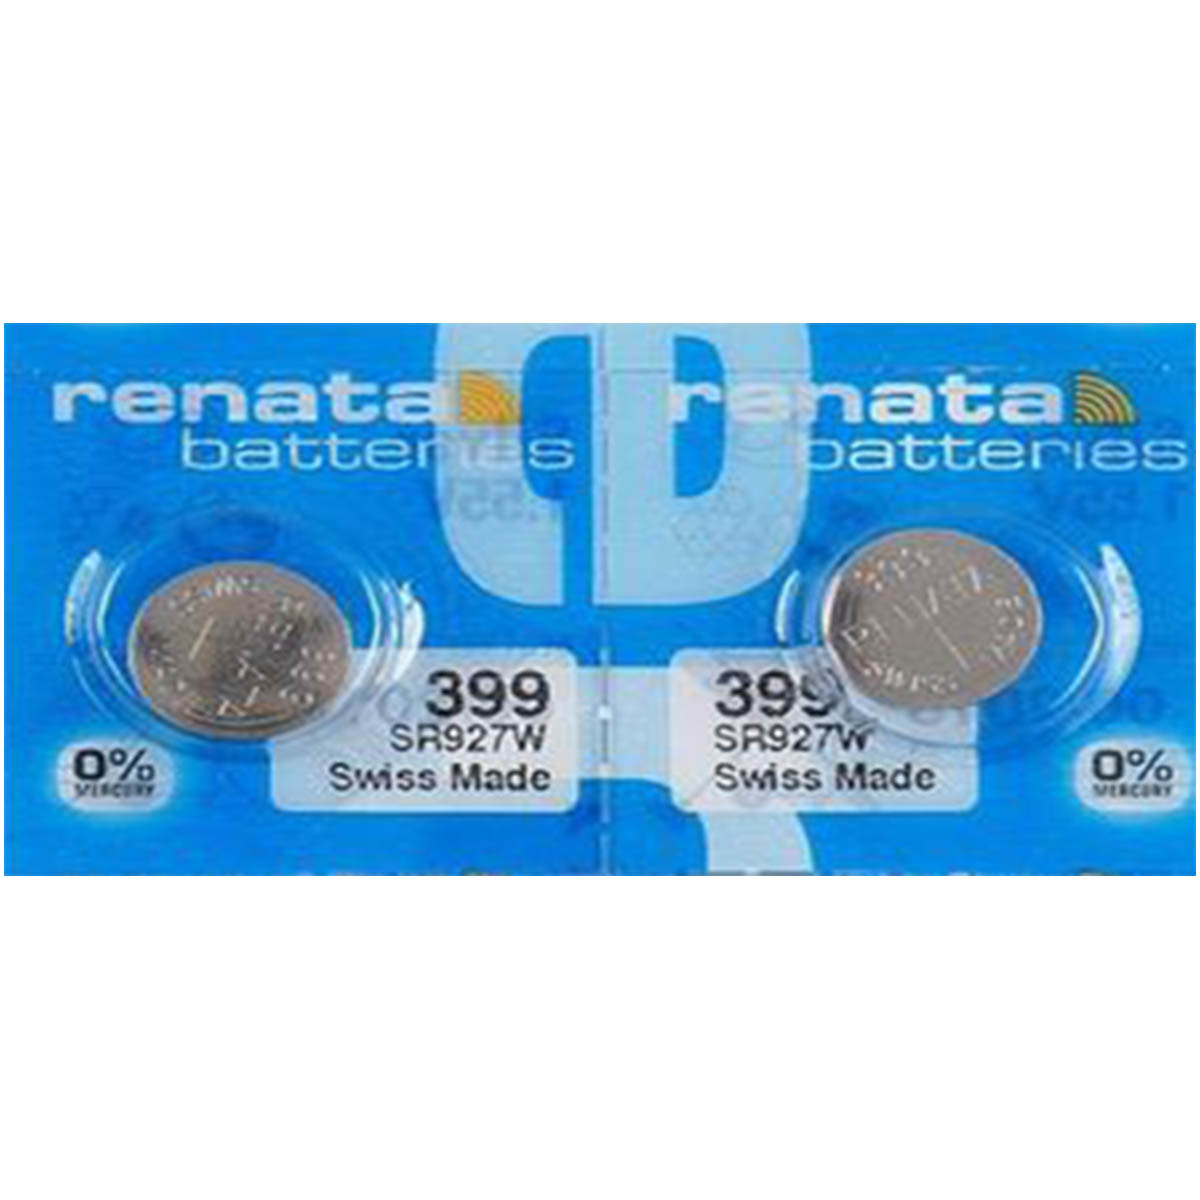 Renata 399 Battery (SR927W) Silver Oxide 1.55V (1PC)